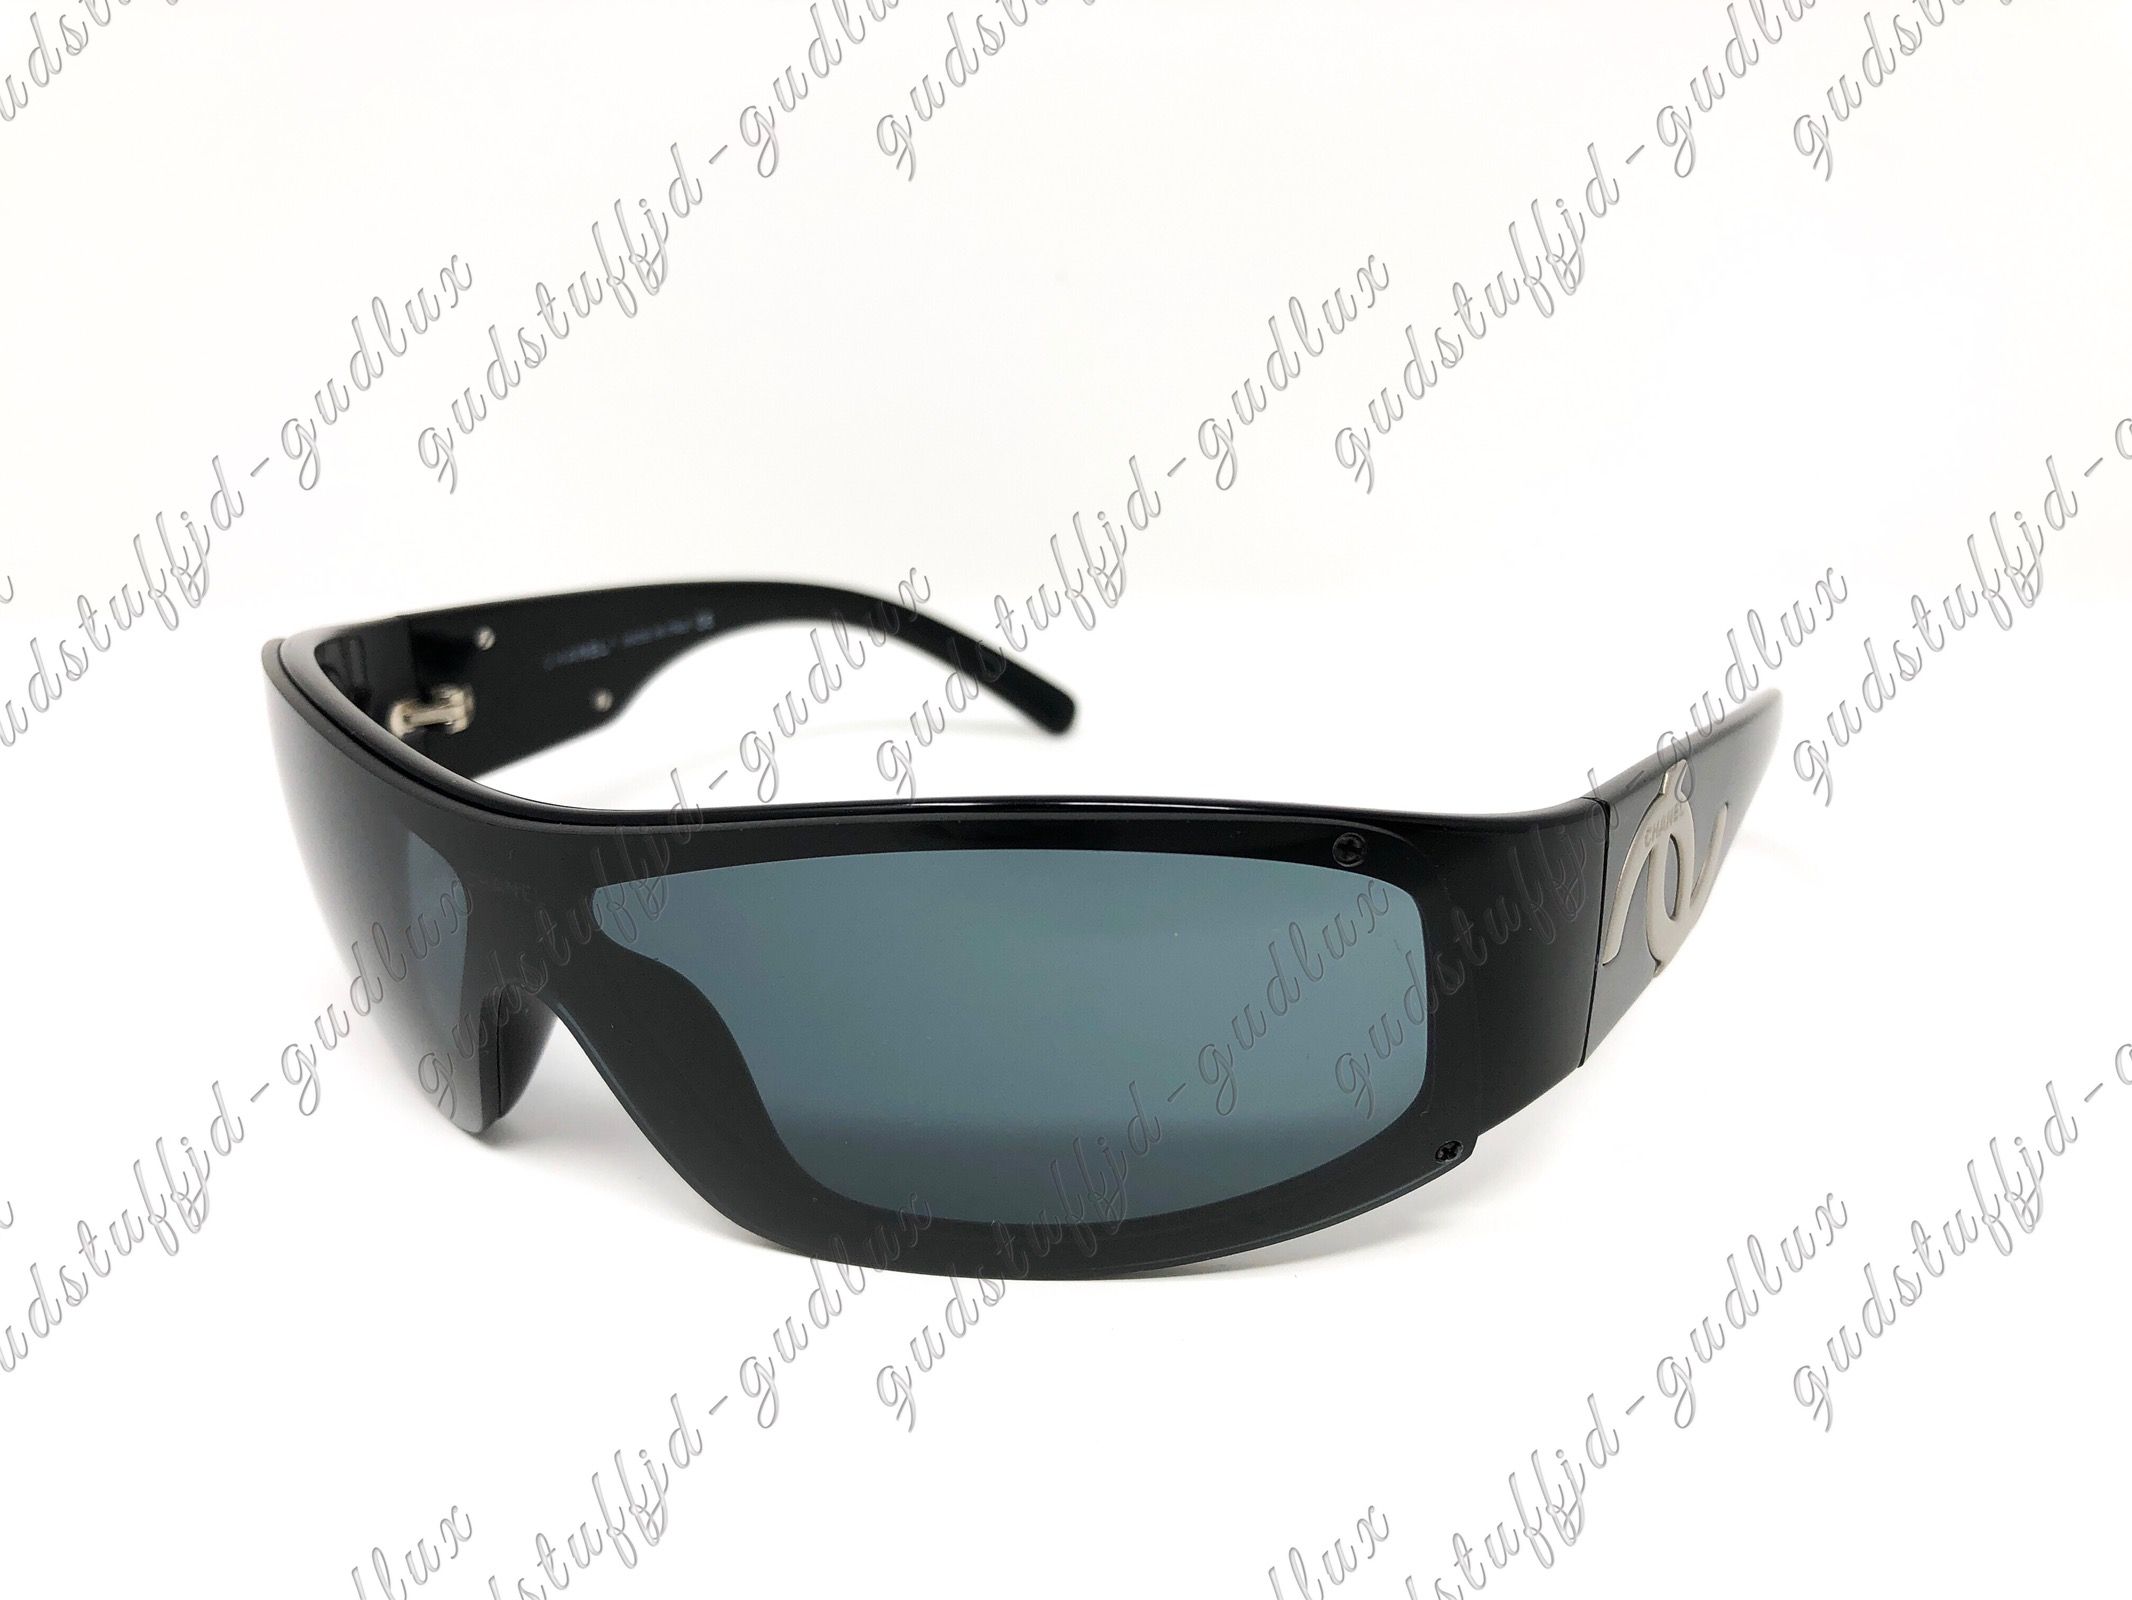 Chanel Black Wrap Sunglasses. Model 5072 C501/87